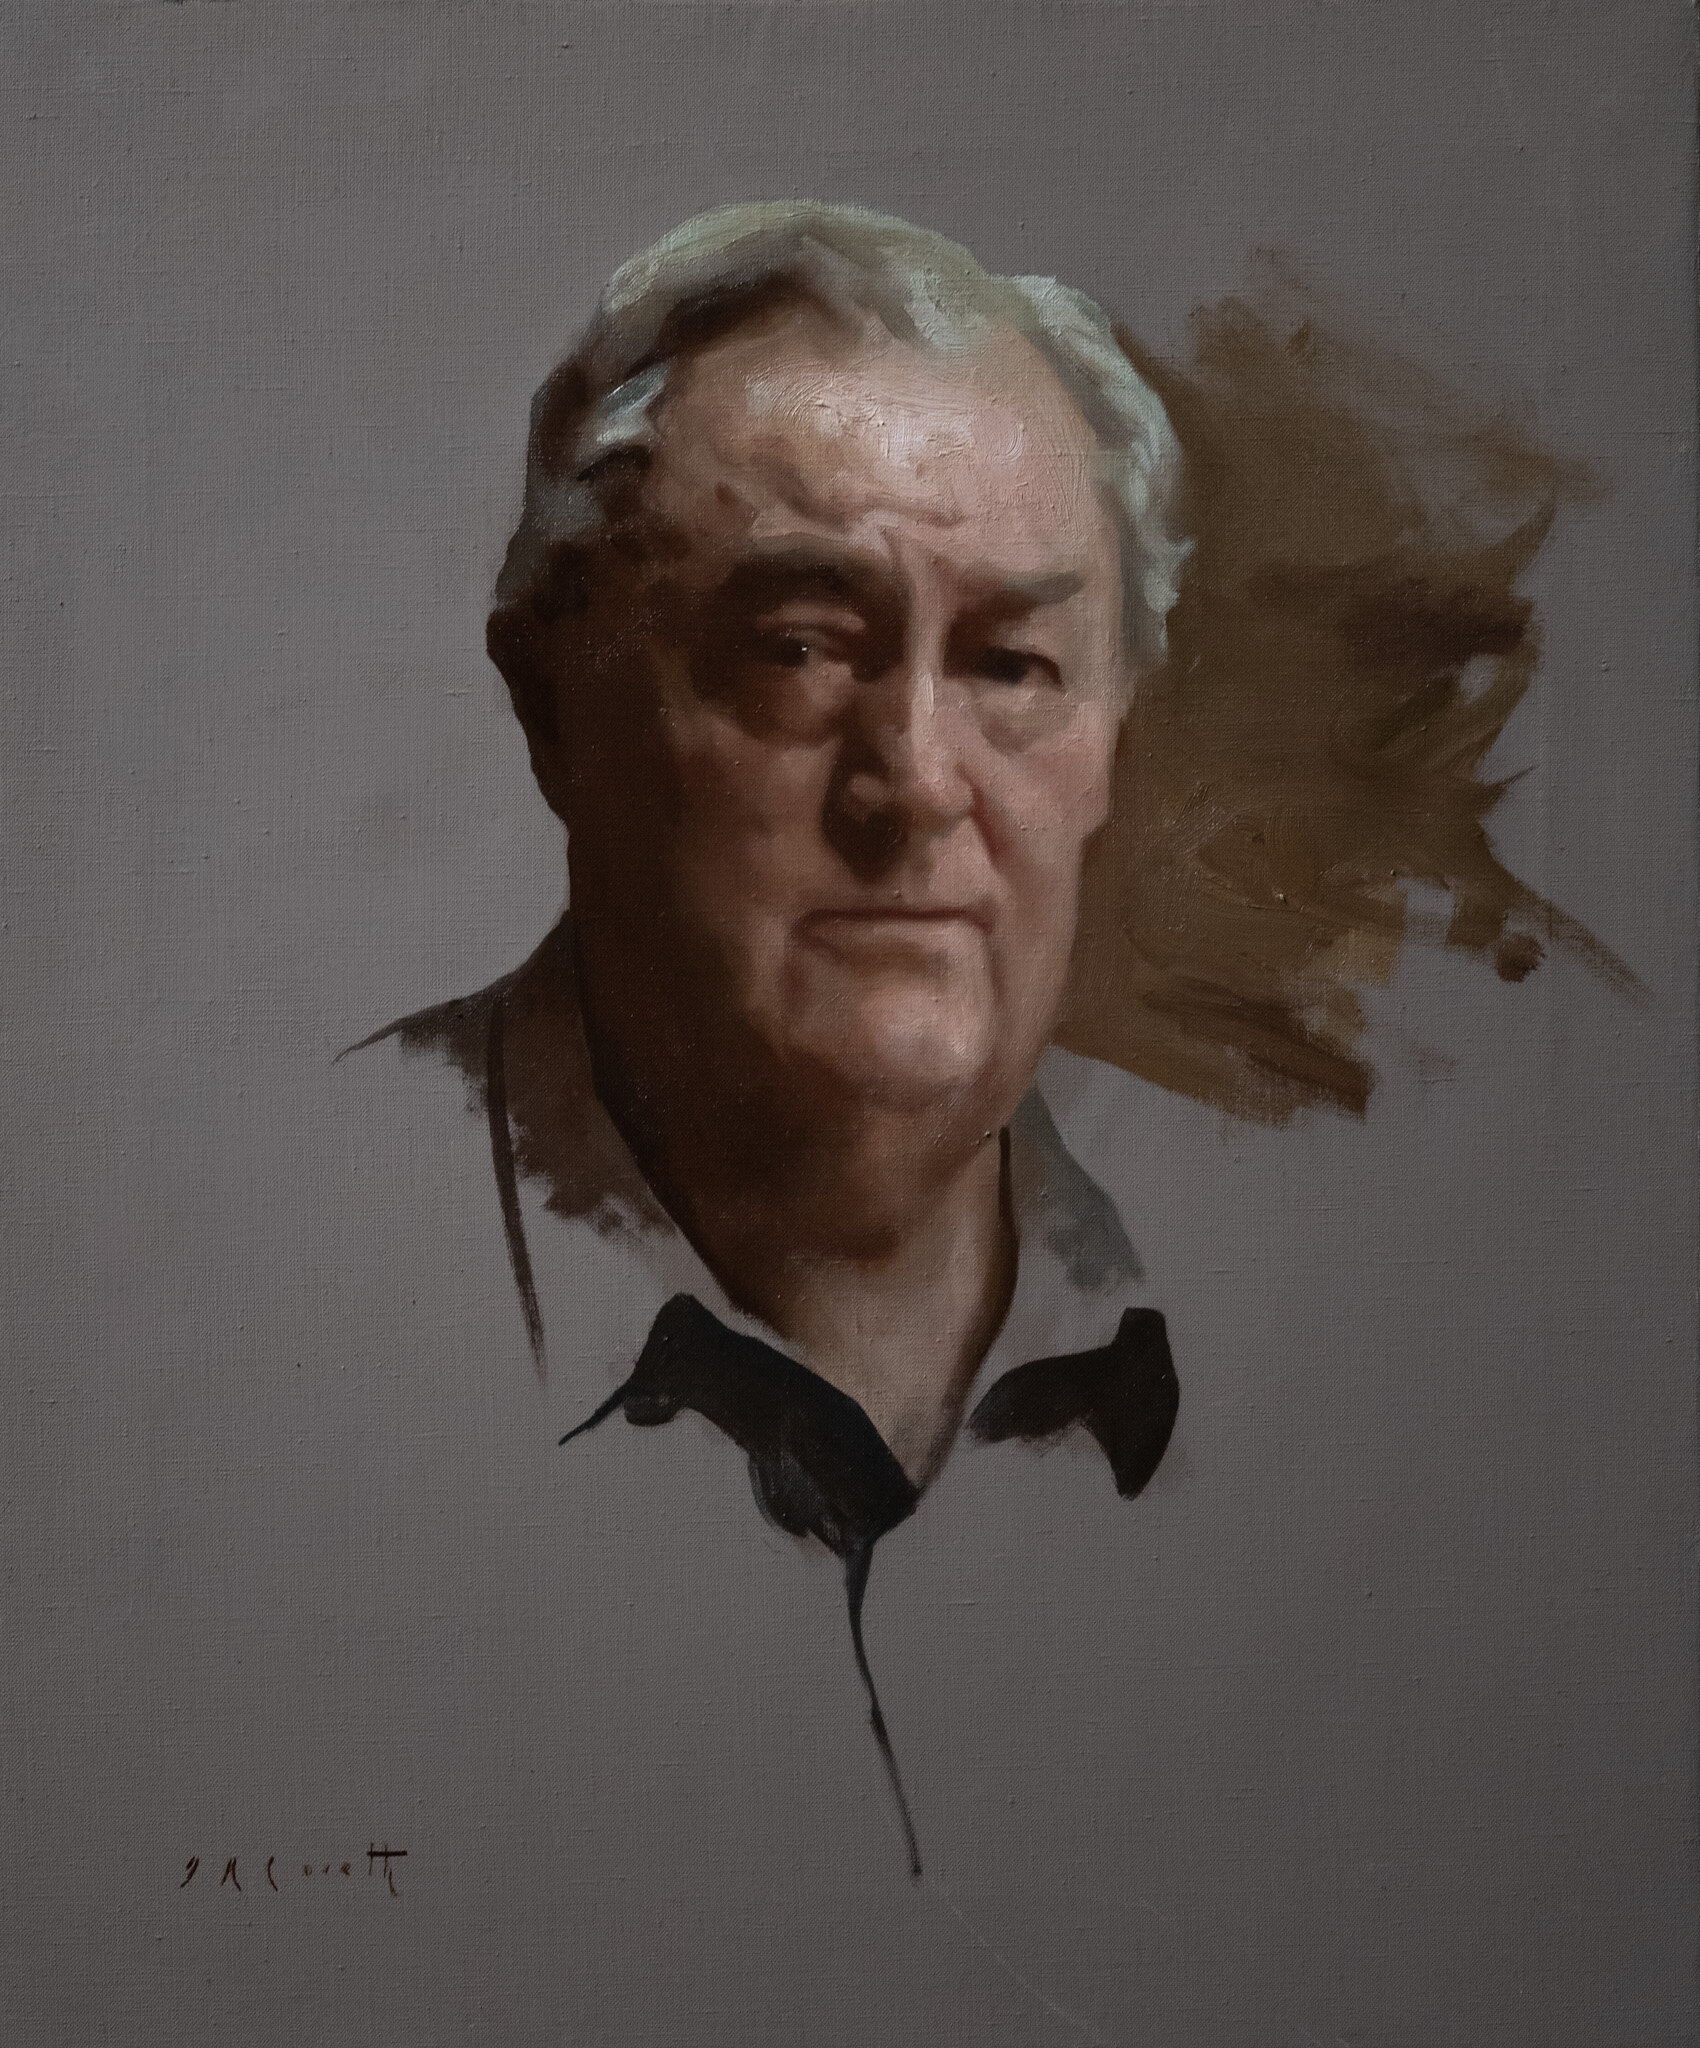 Dr Richard Leakey